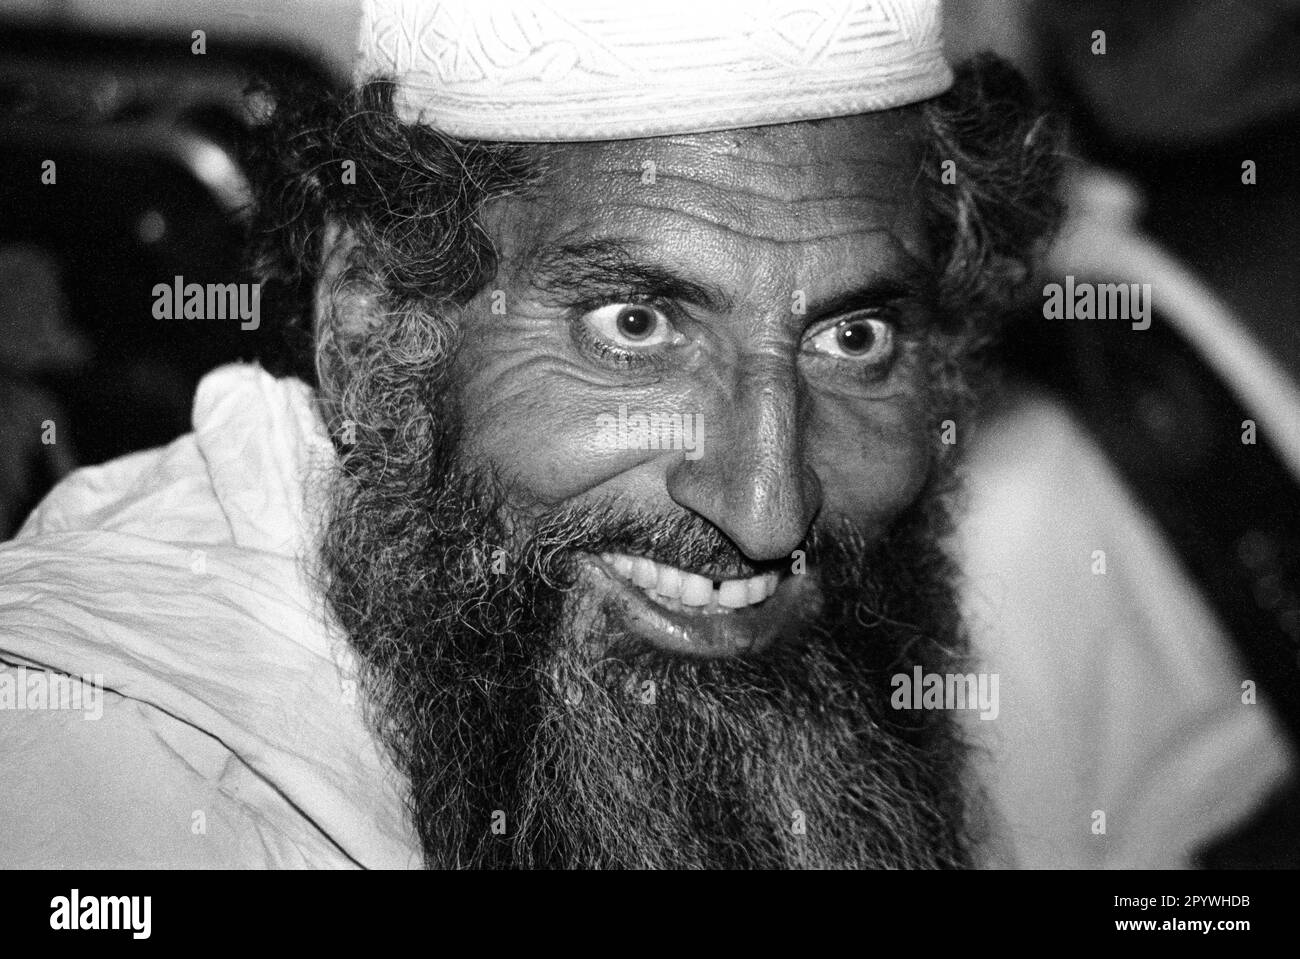 Afghanistan, Khost, 24. Oktober 1990. Archivnr.: 21-57-02 Foto: Paschtun Khazan-Gul Tani, Kommandeur der Mudschaheddin. [Maschinelle Übersetzung] Stockfoto